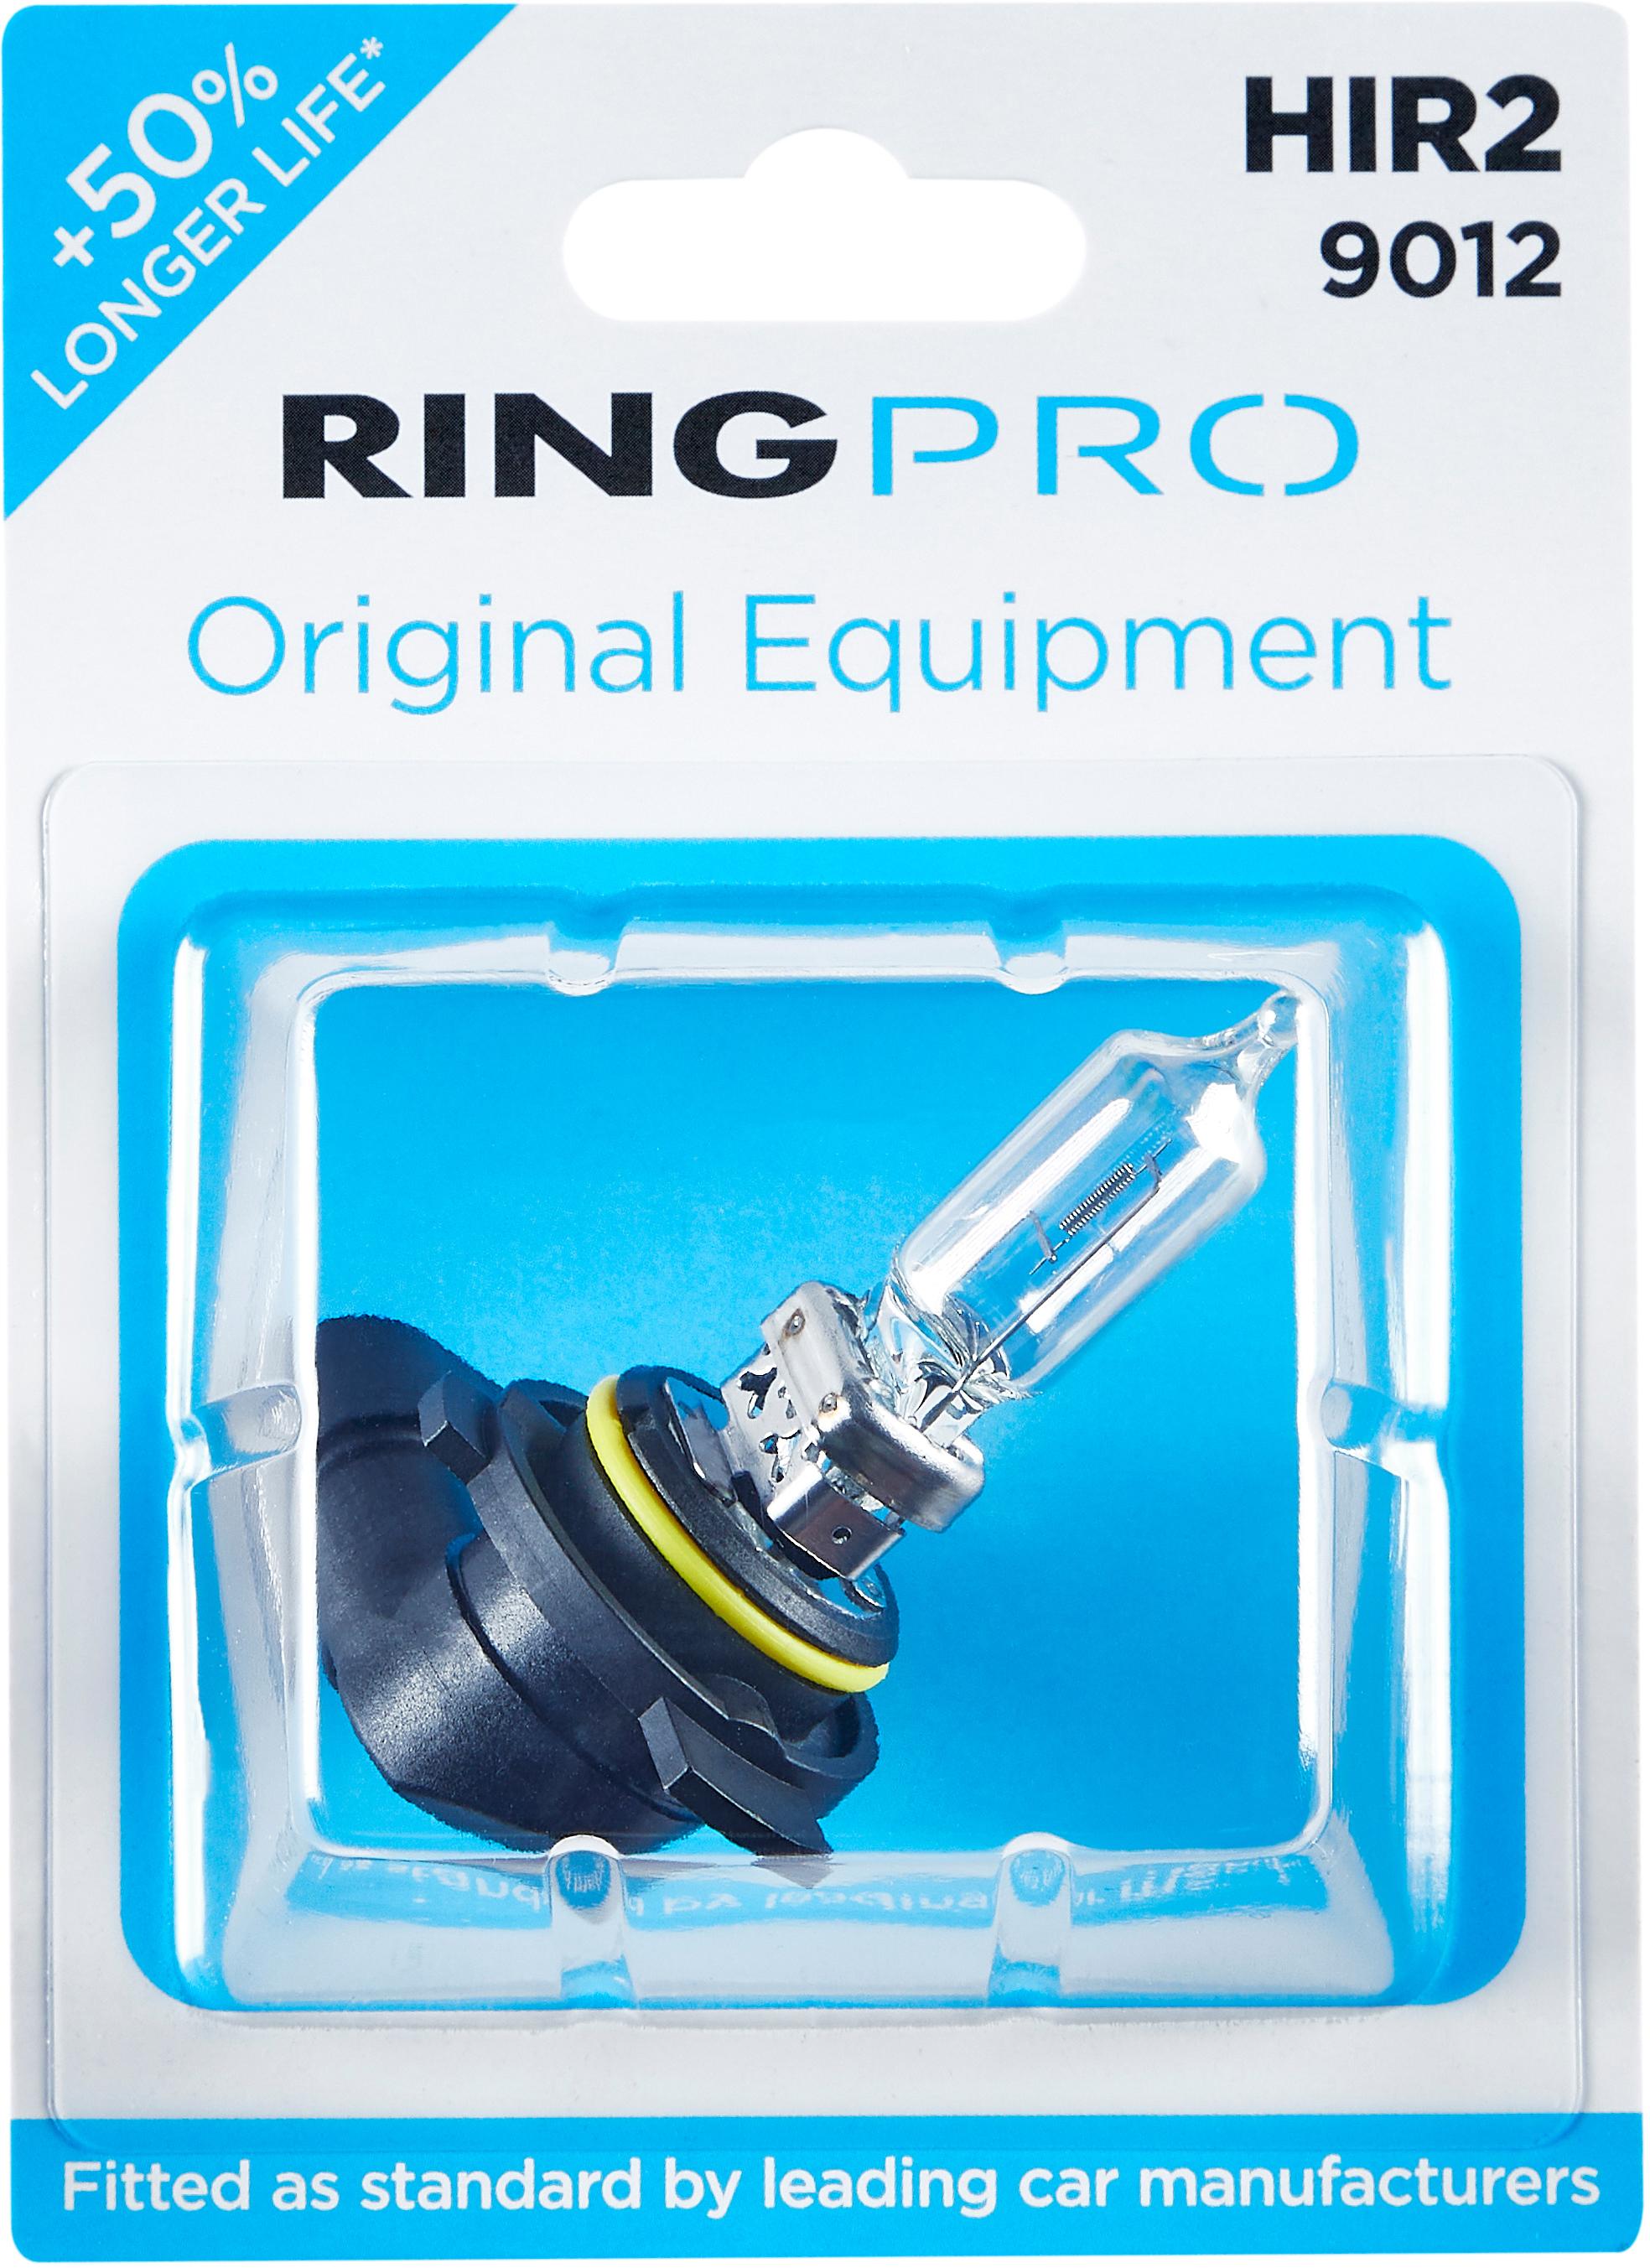 Ring Pro Hir2 9012 Car Headlight Bulb Single Pack